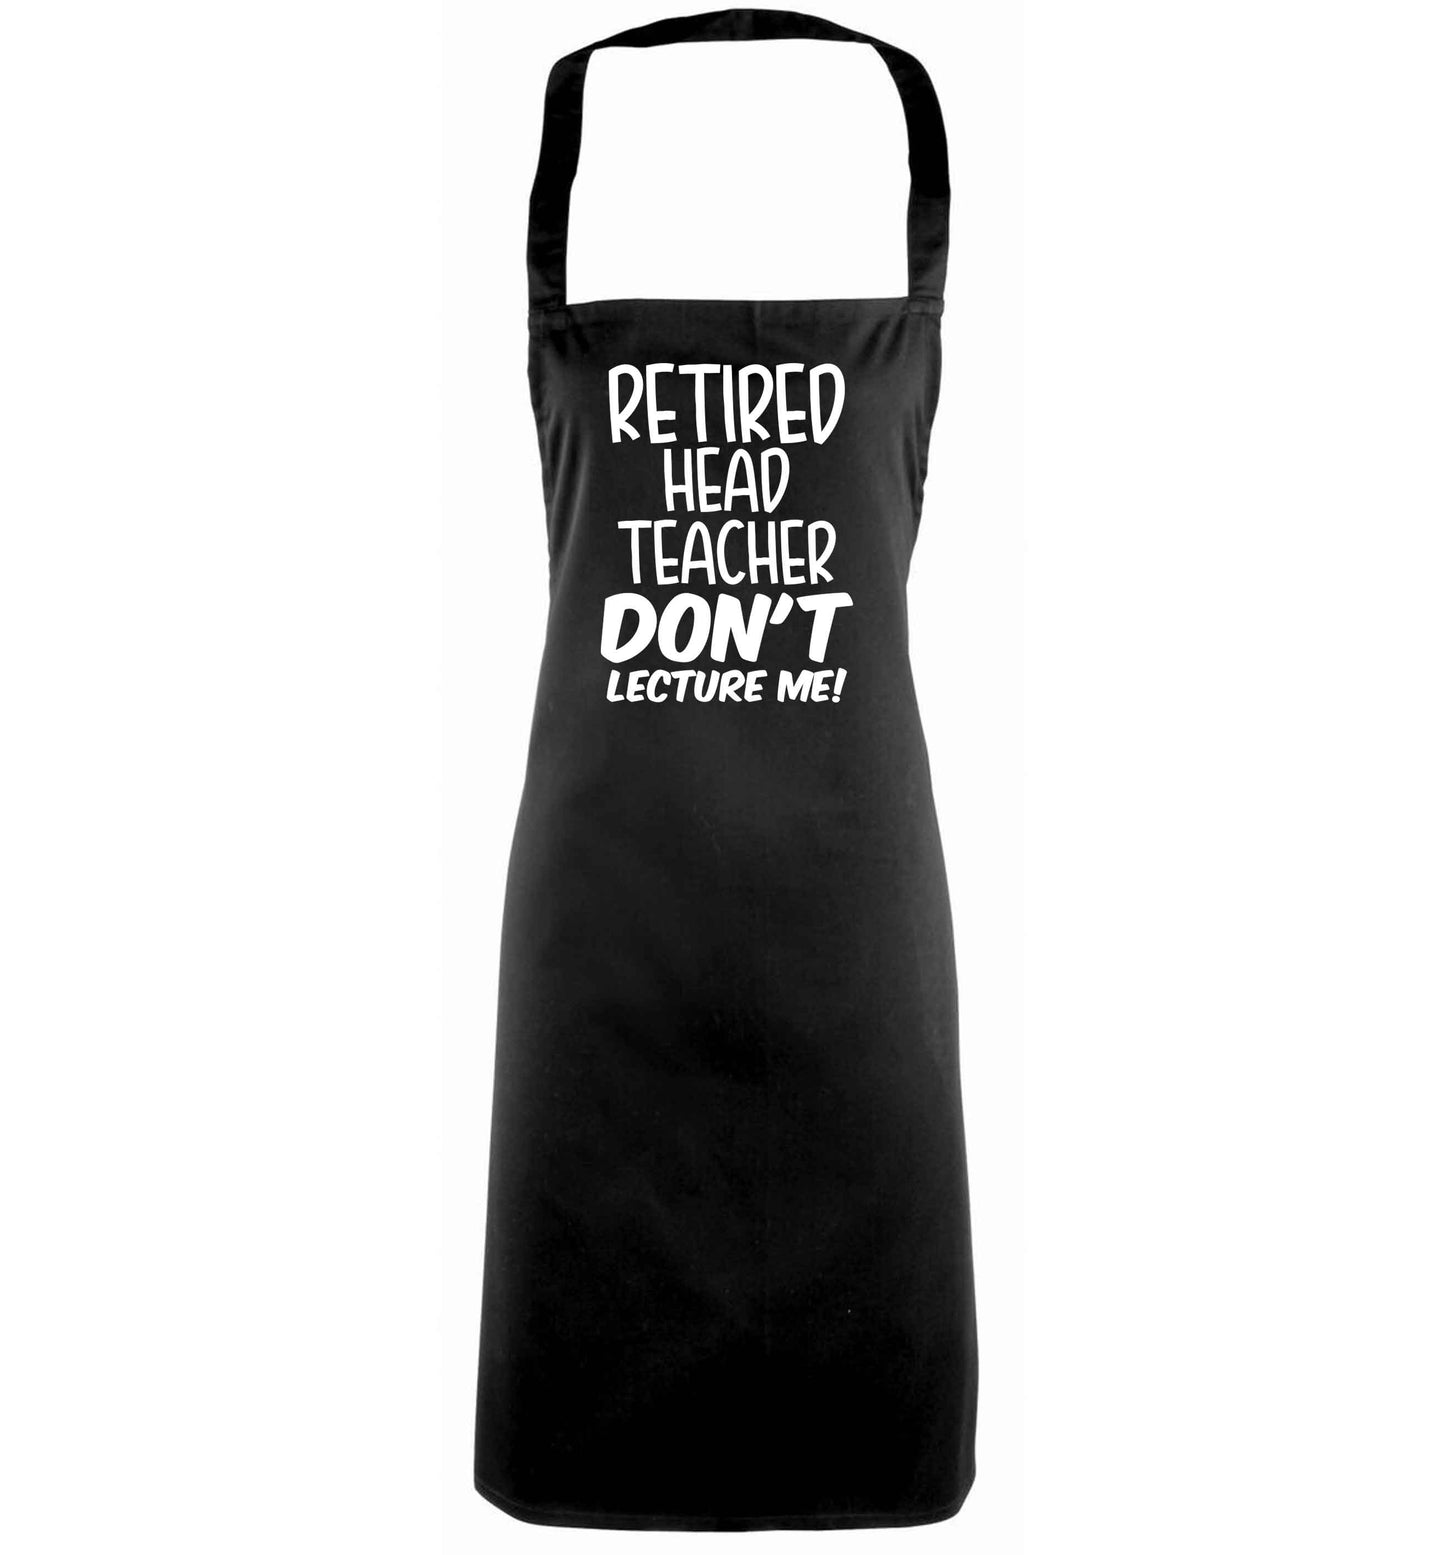 Retired head teacher don't lecture me! black apron